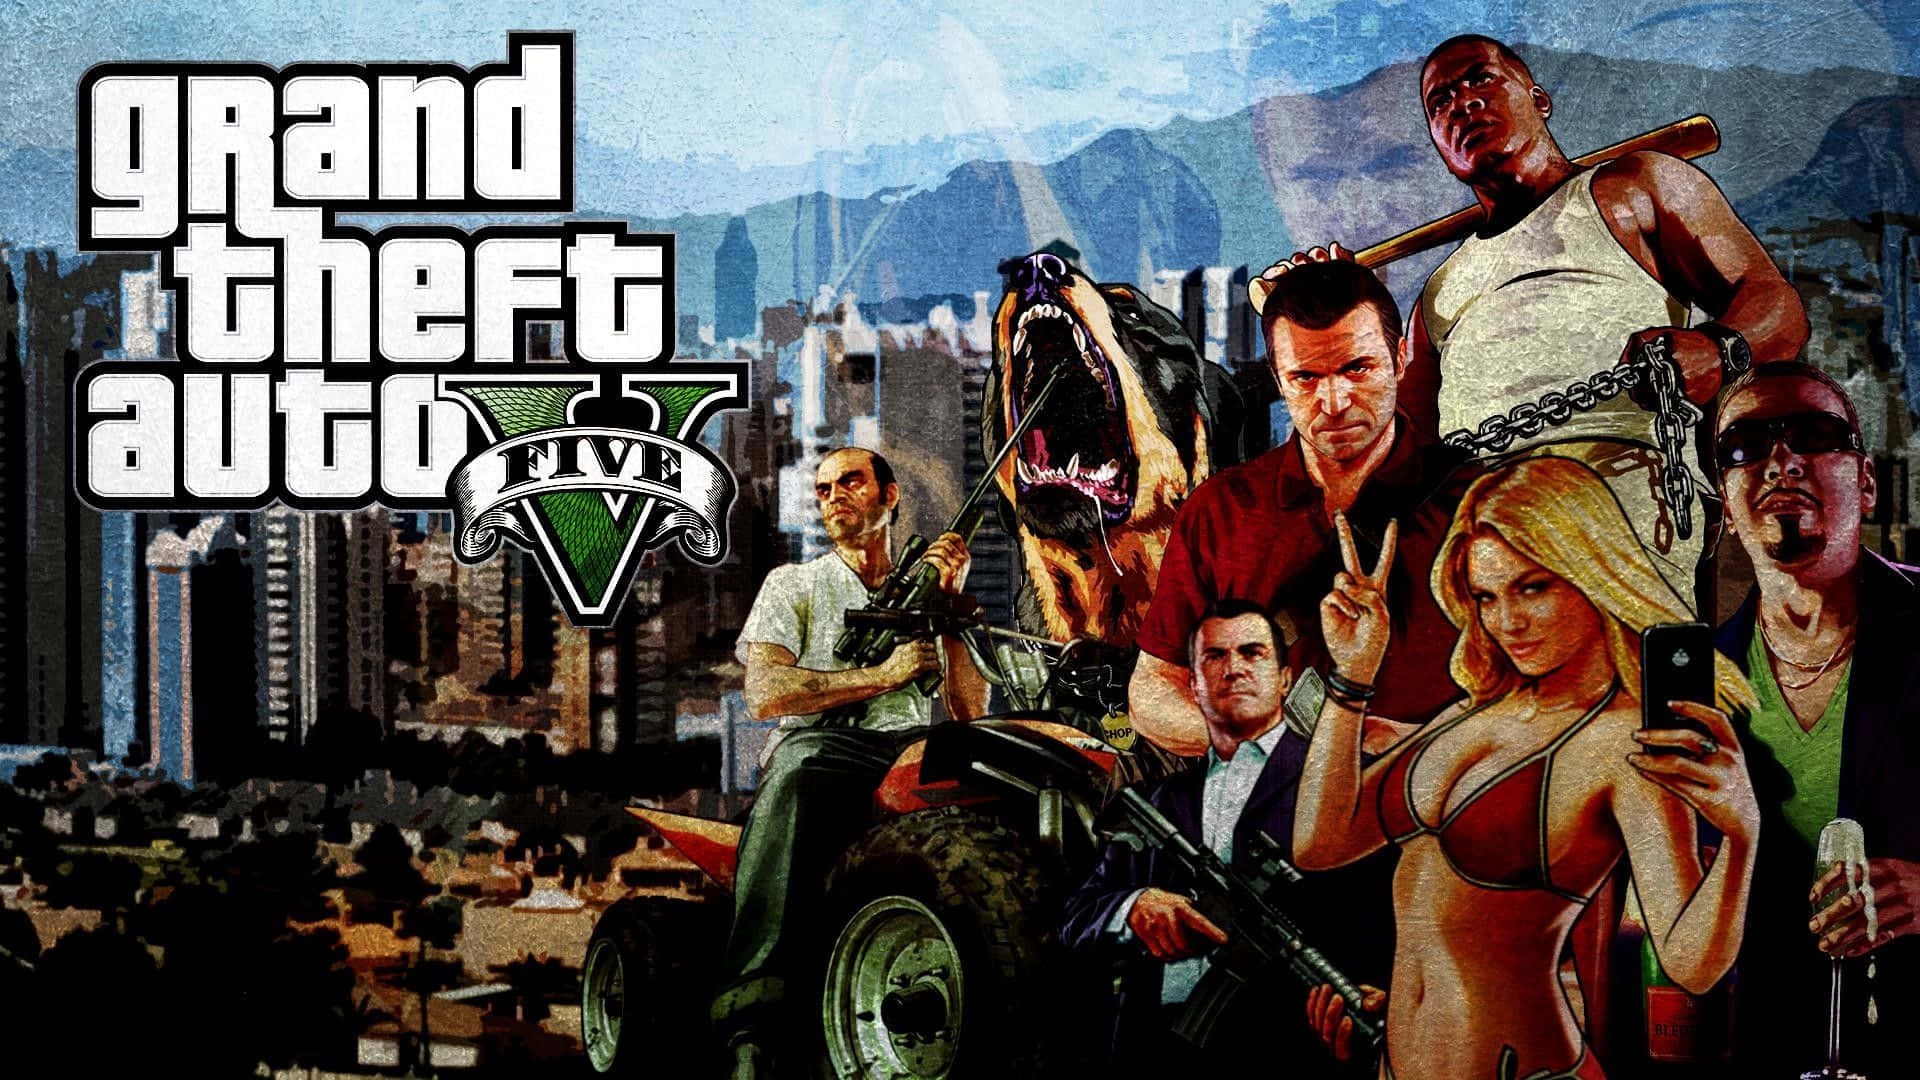 "Grand Theft Auto V: Explore the Unlimited Possibilities"